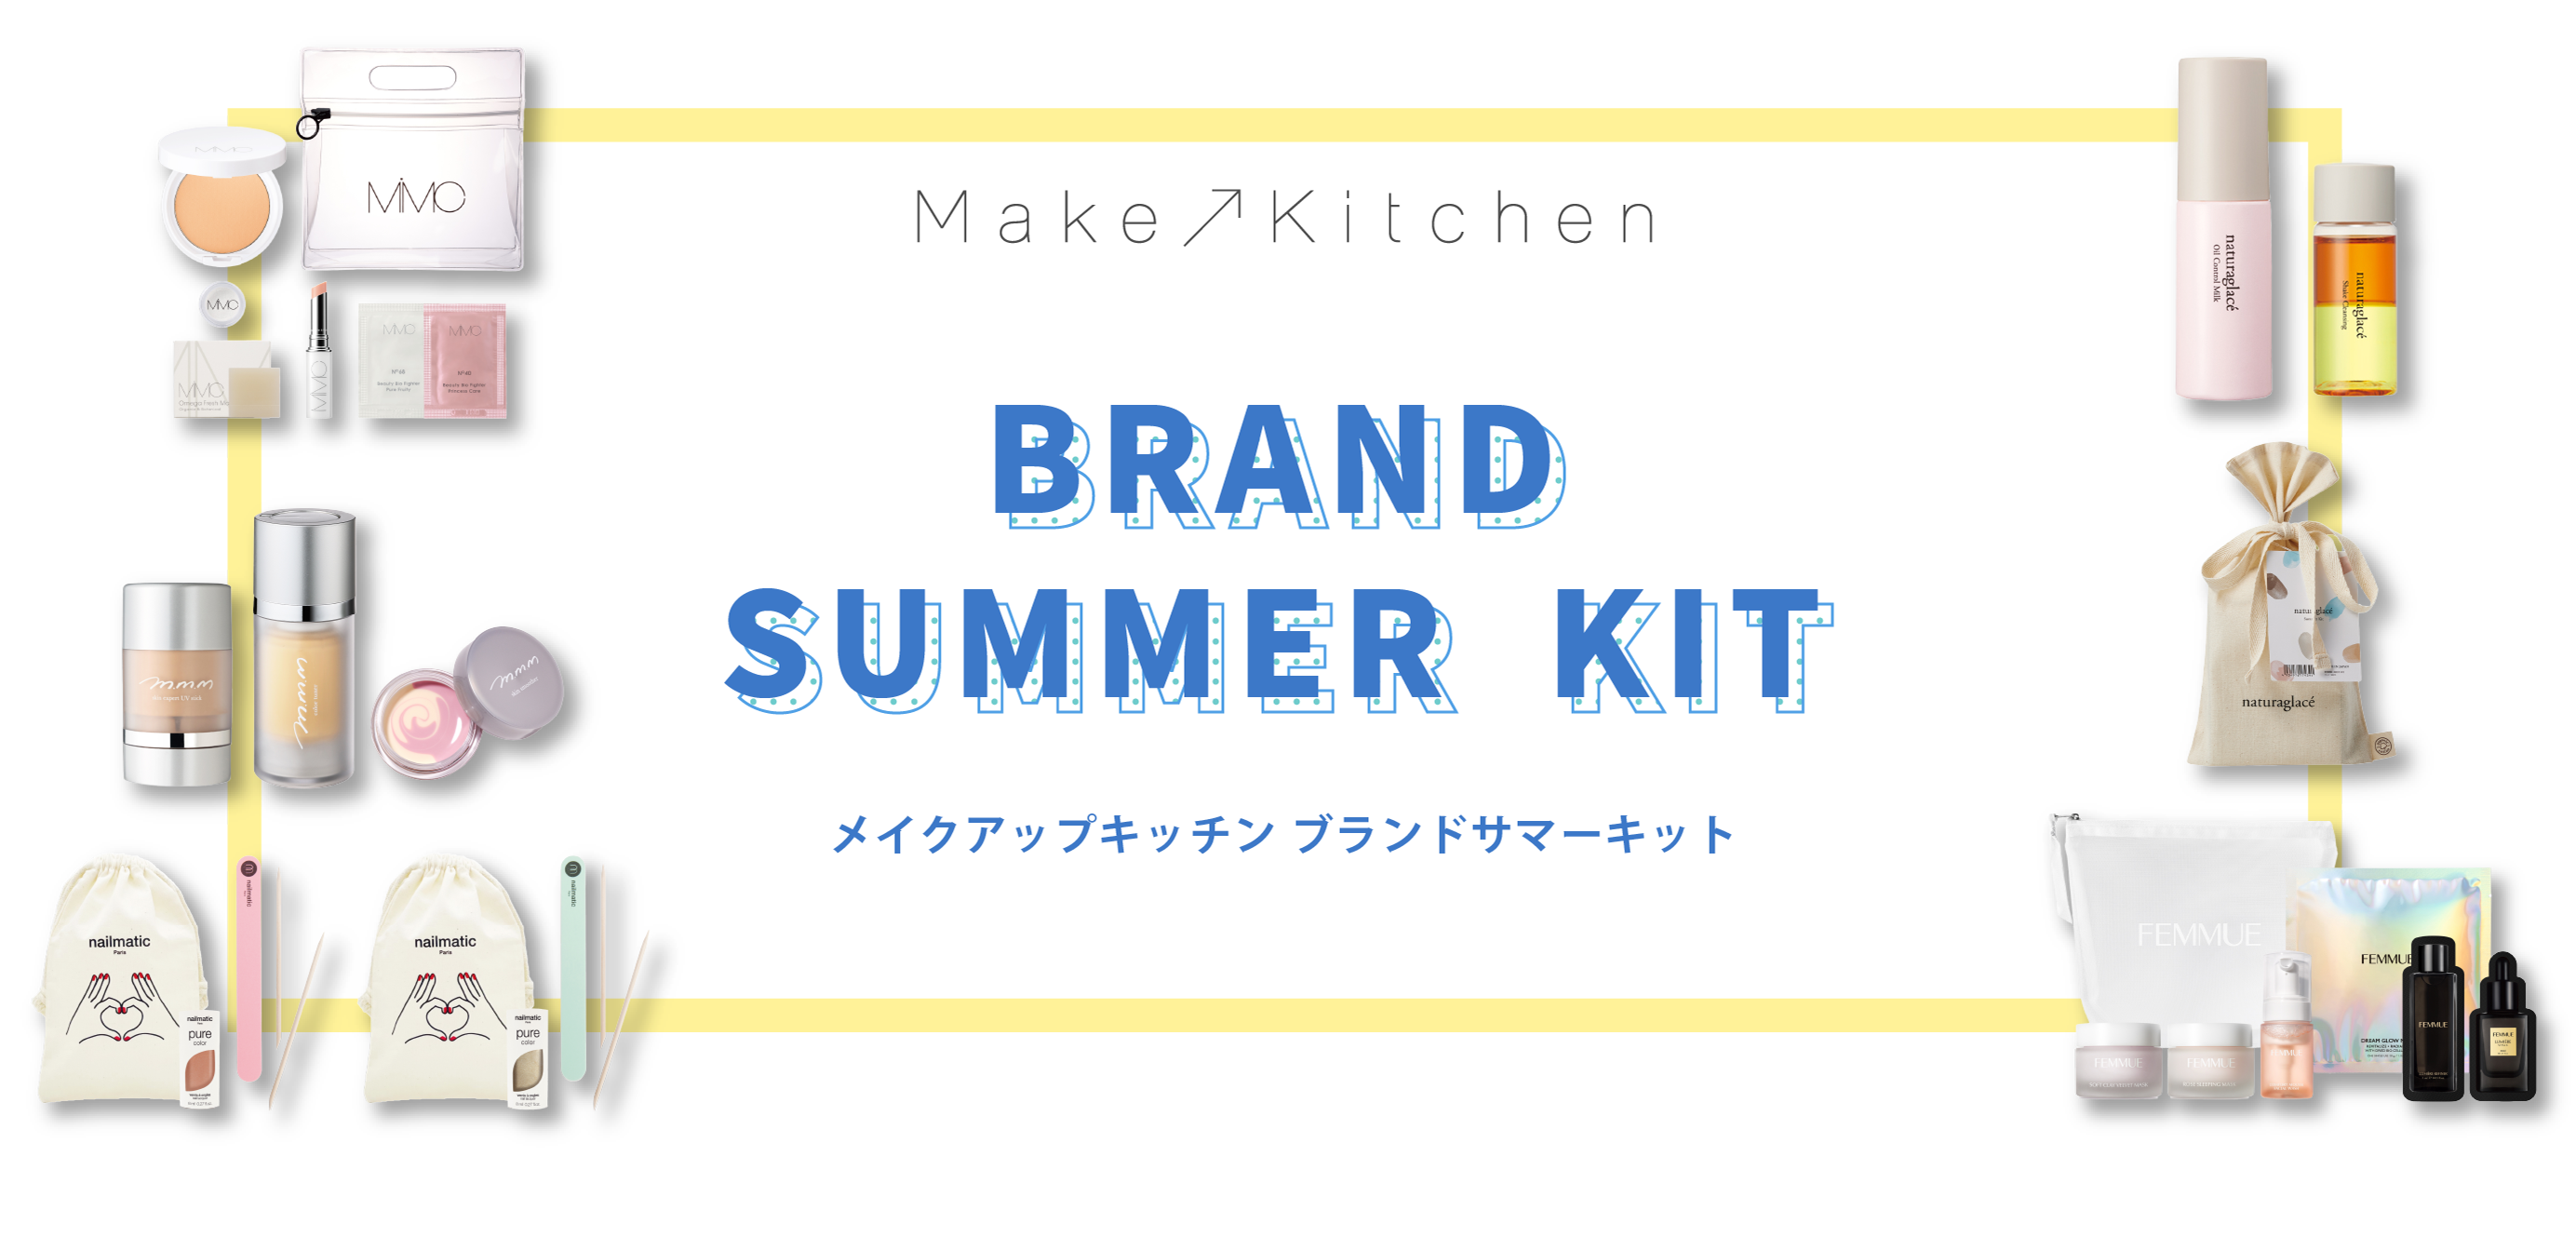 Make Up Kitchen BRAND SUMMER KIT メイクアップキッチン ブランドサマーキット